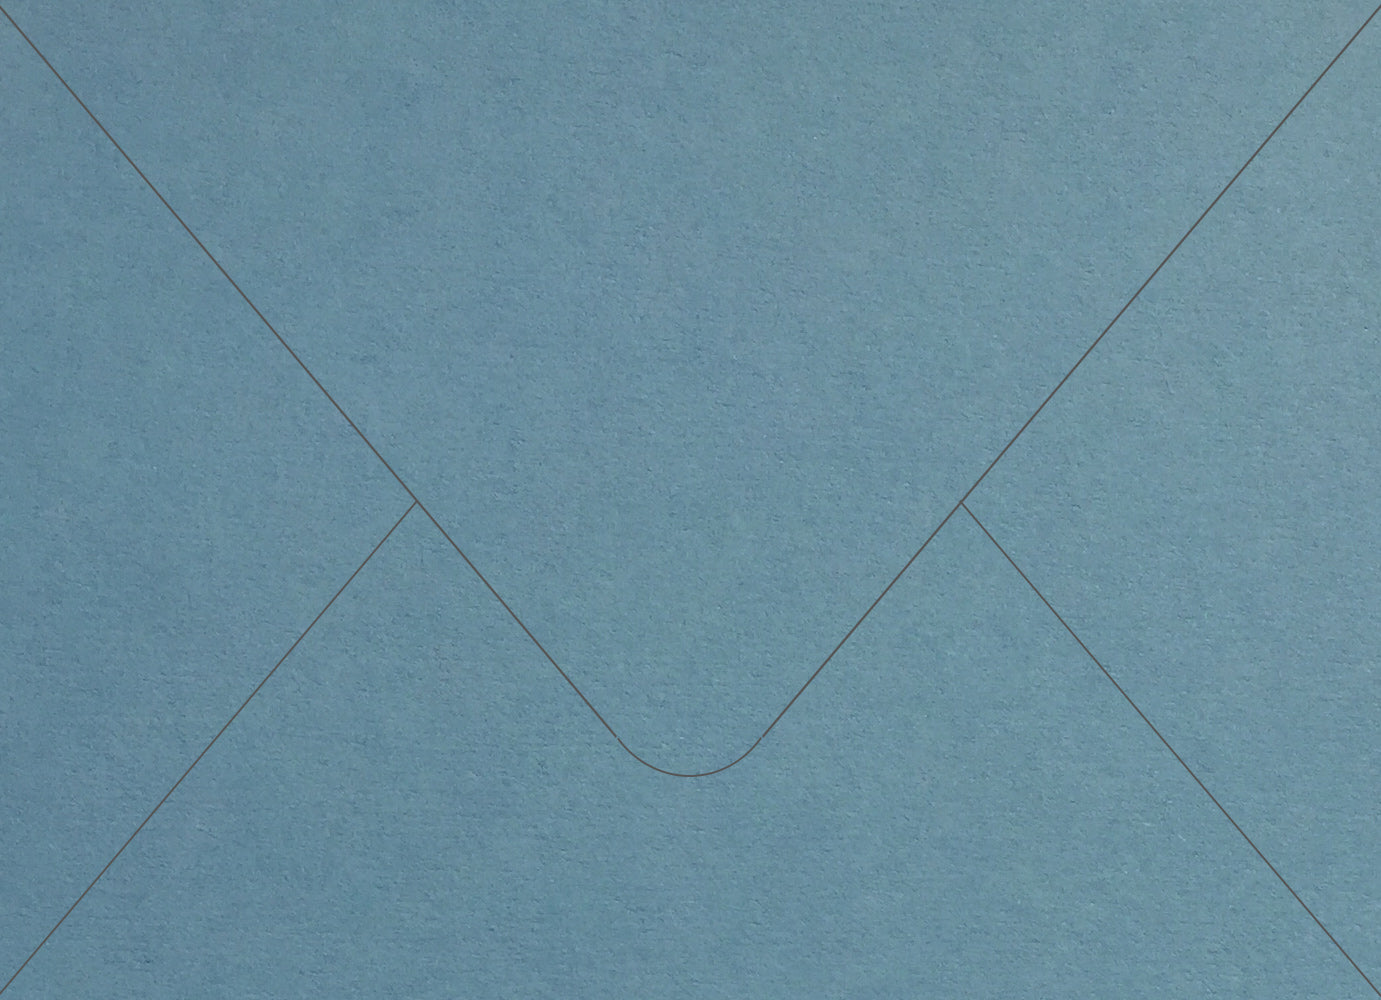 Azure Blue Paper - 25 x 38 in 91 lb Text Vellum